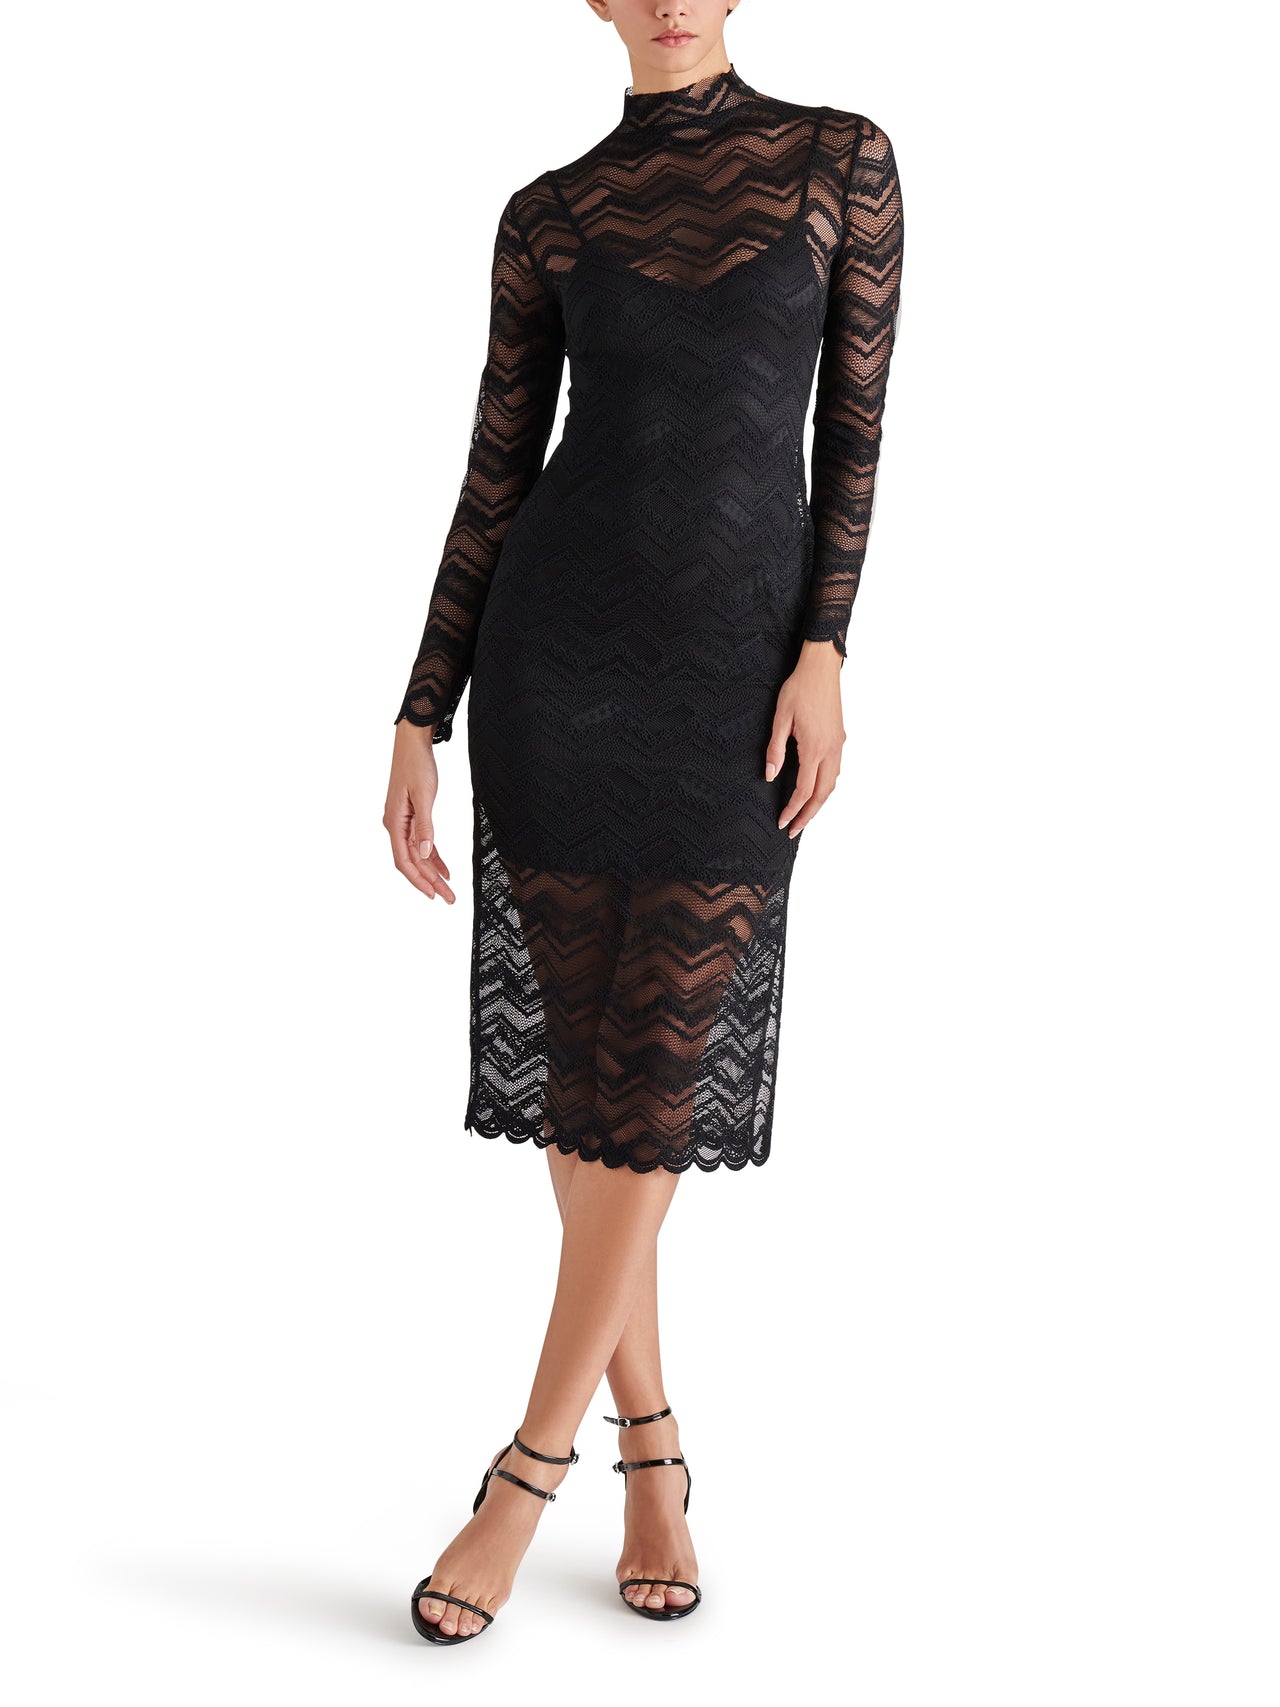 Vivienne Chevron Knit Lace Midi Dress With Side Slit, Midi Dress by Steve Madden | LIT Boutique